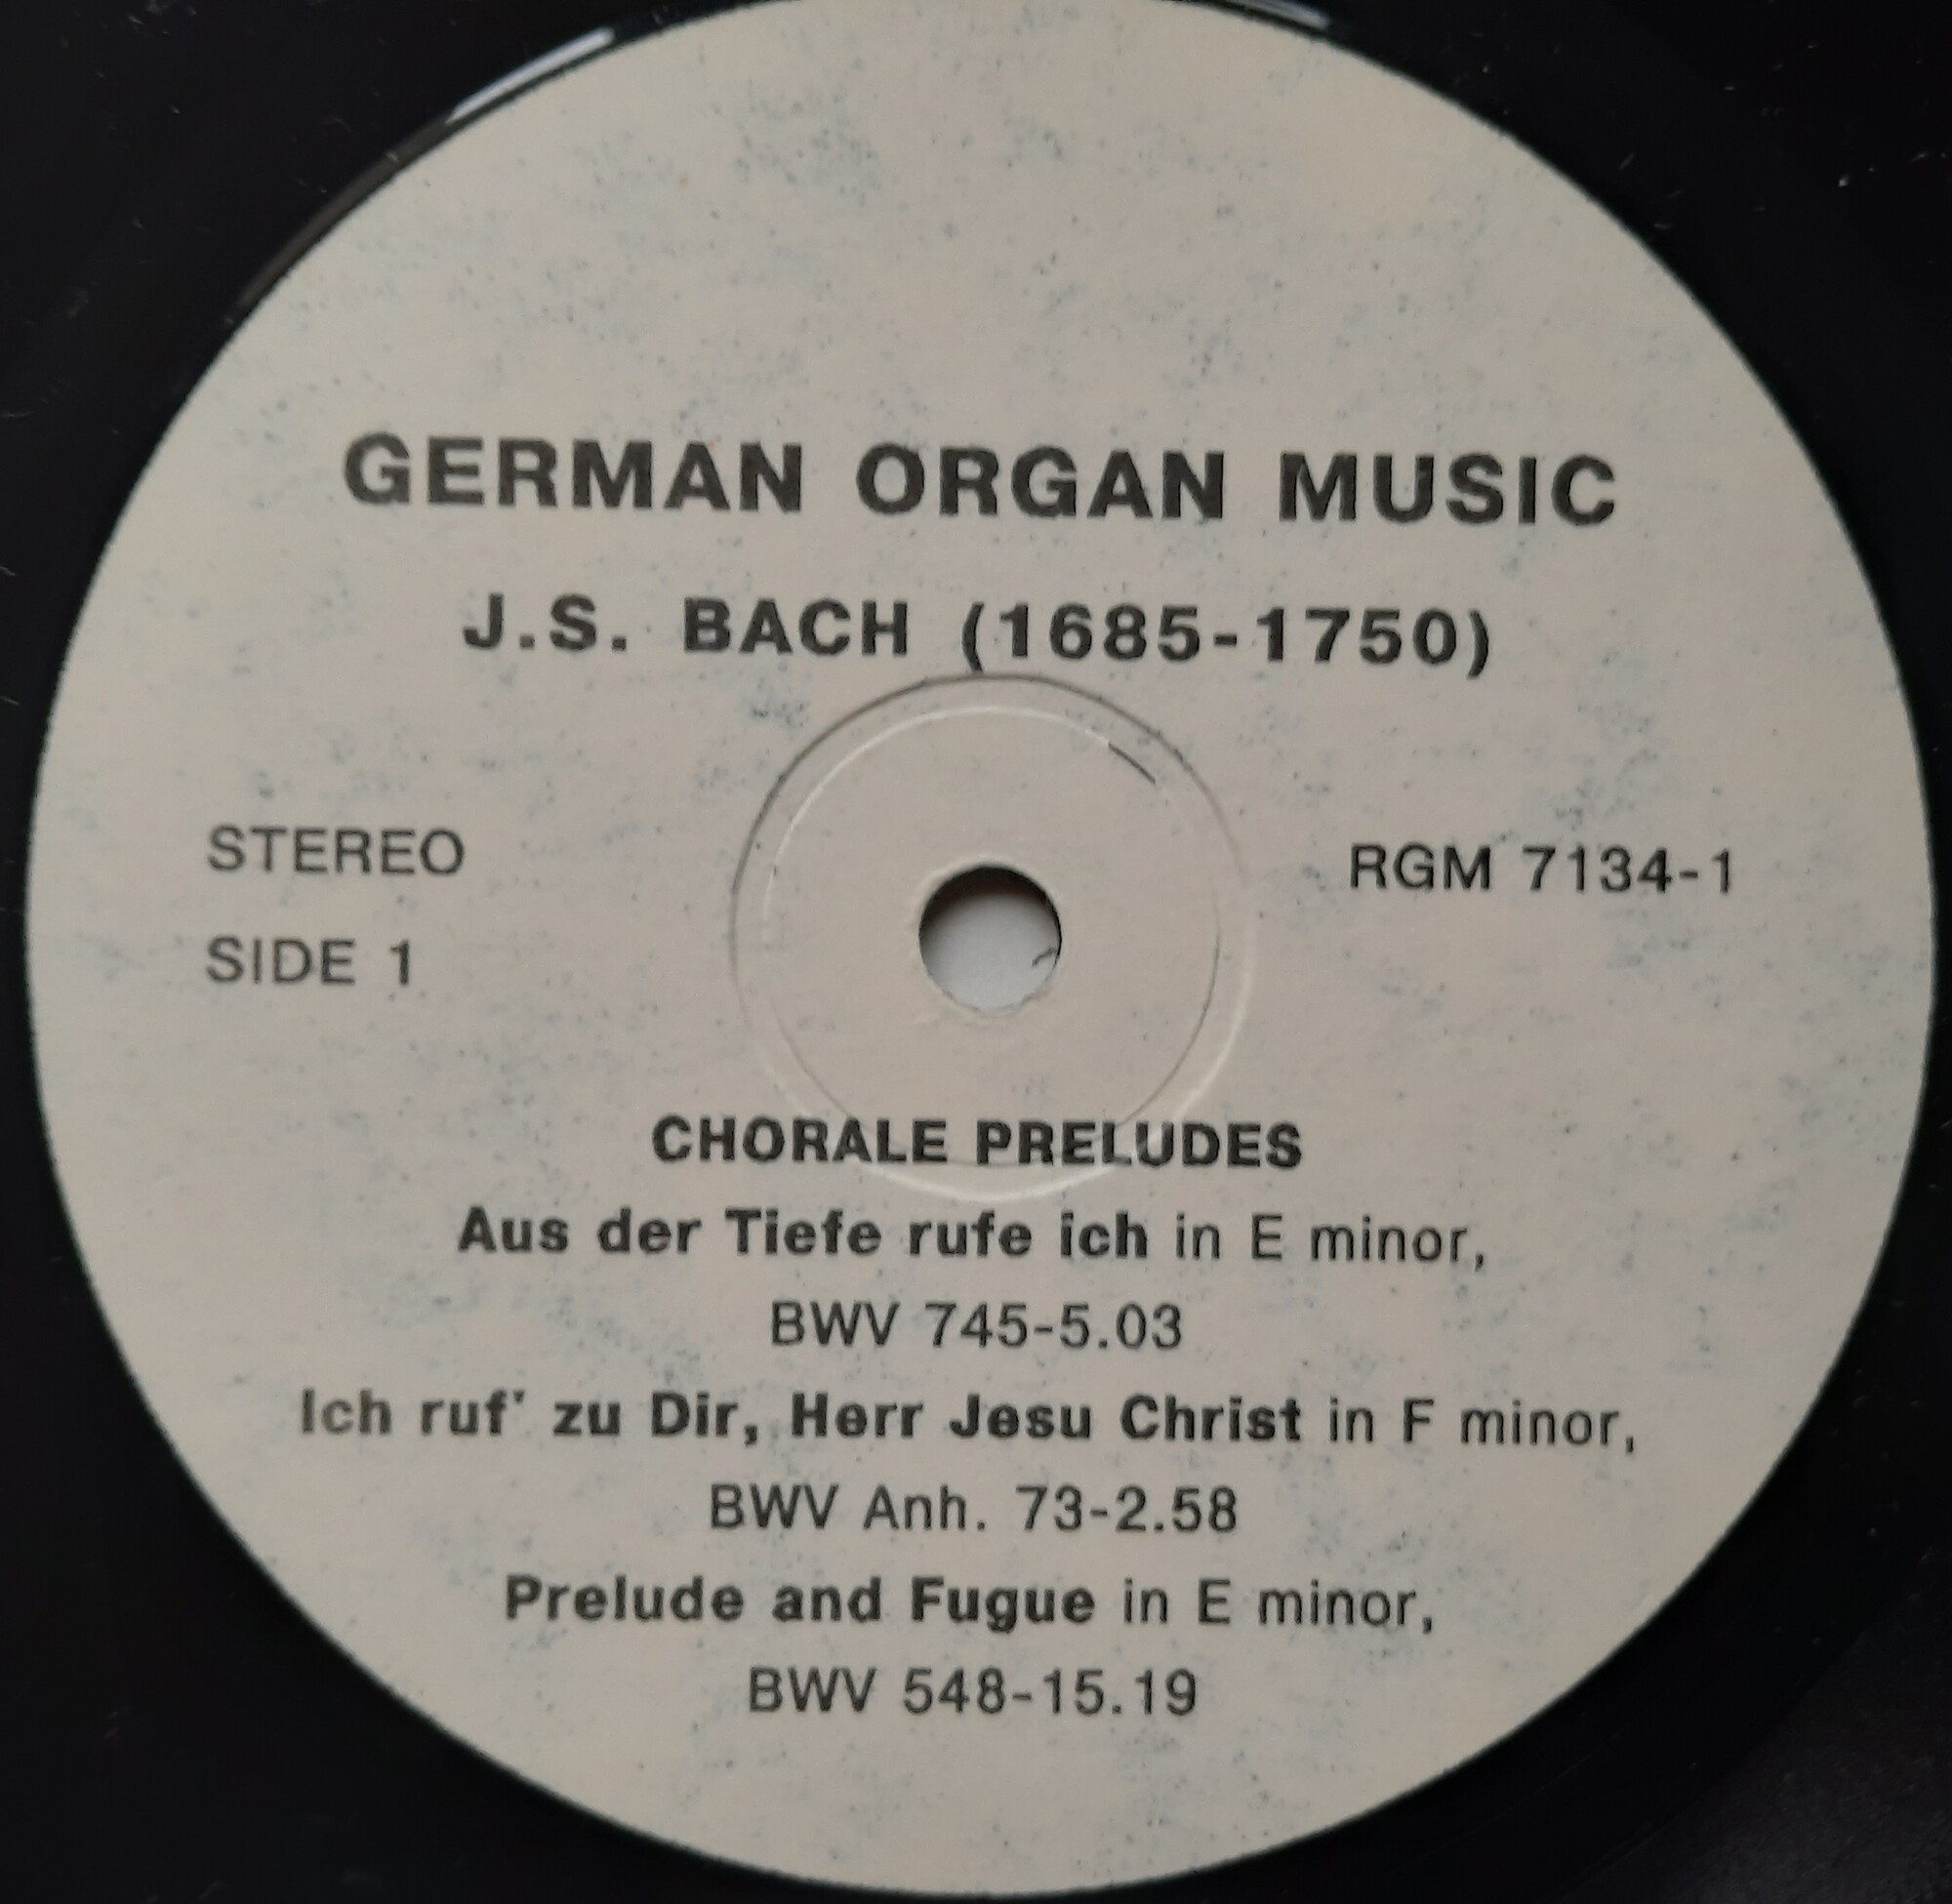 Sergei Tsatsorin "German Organ Music"